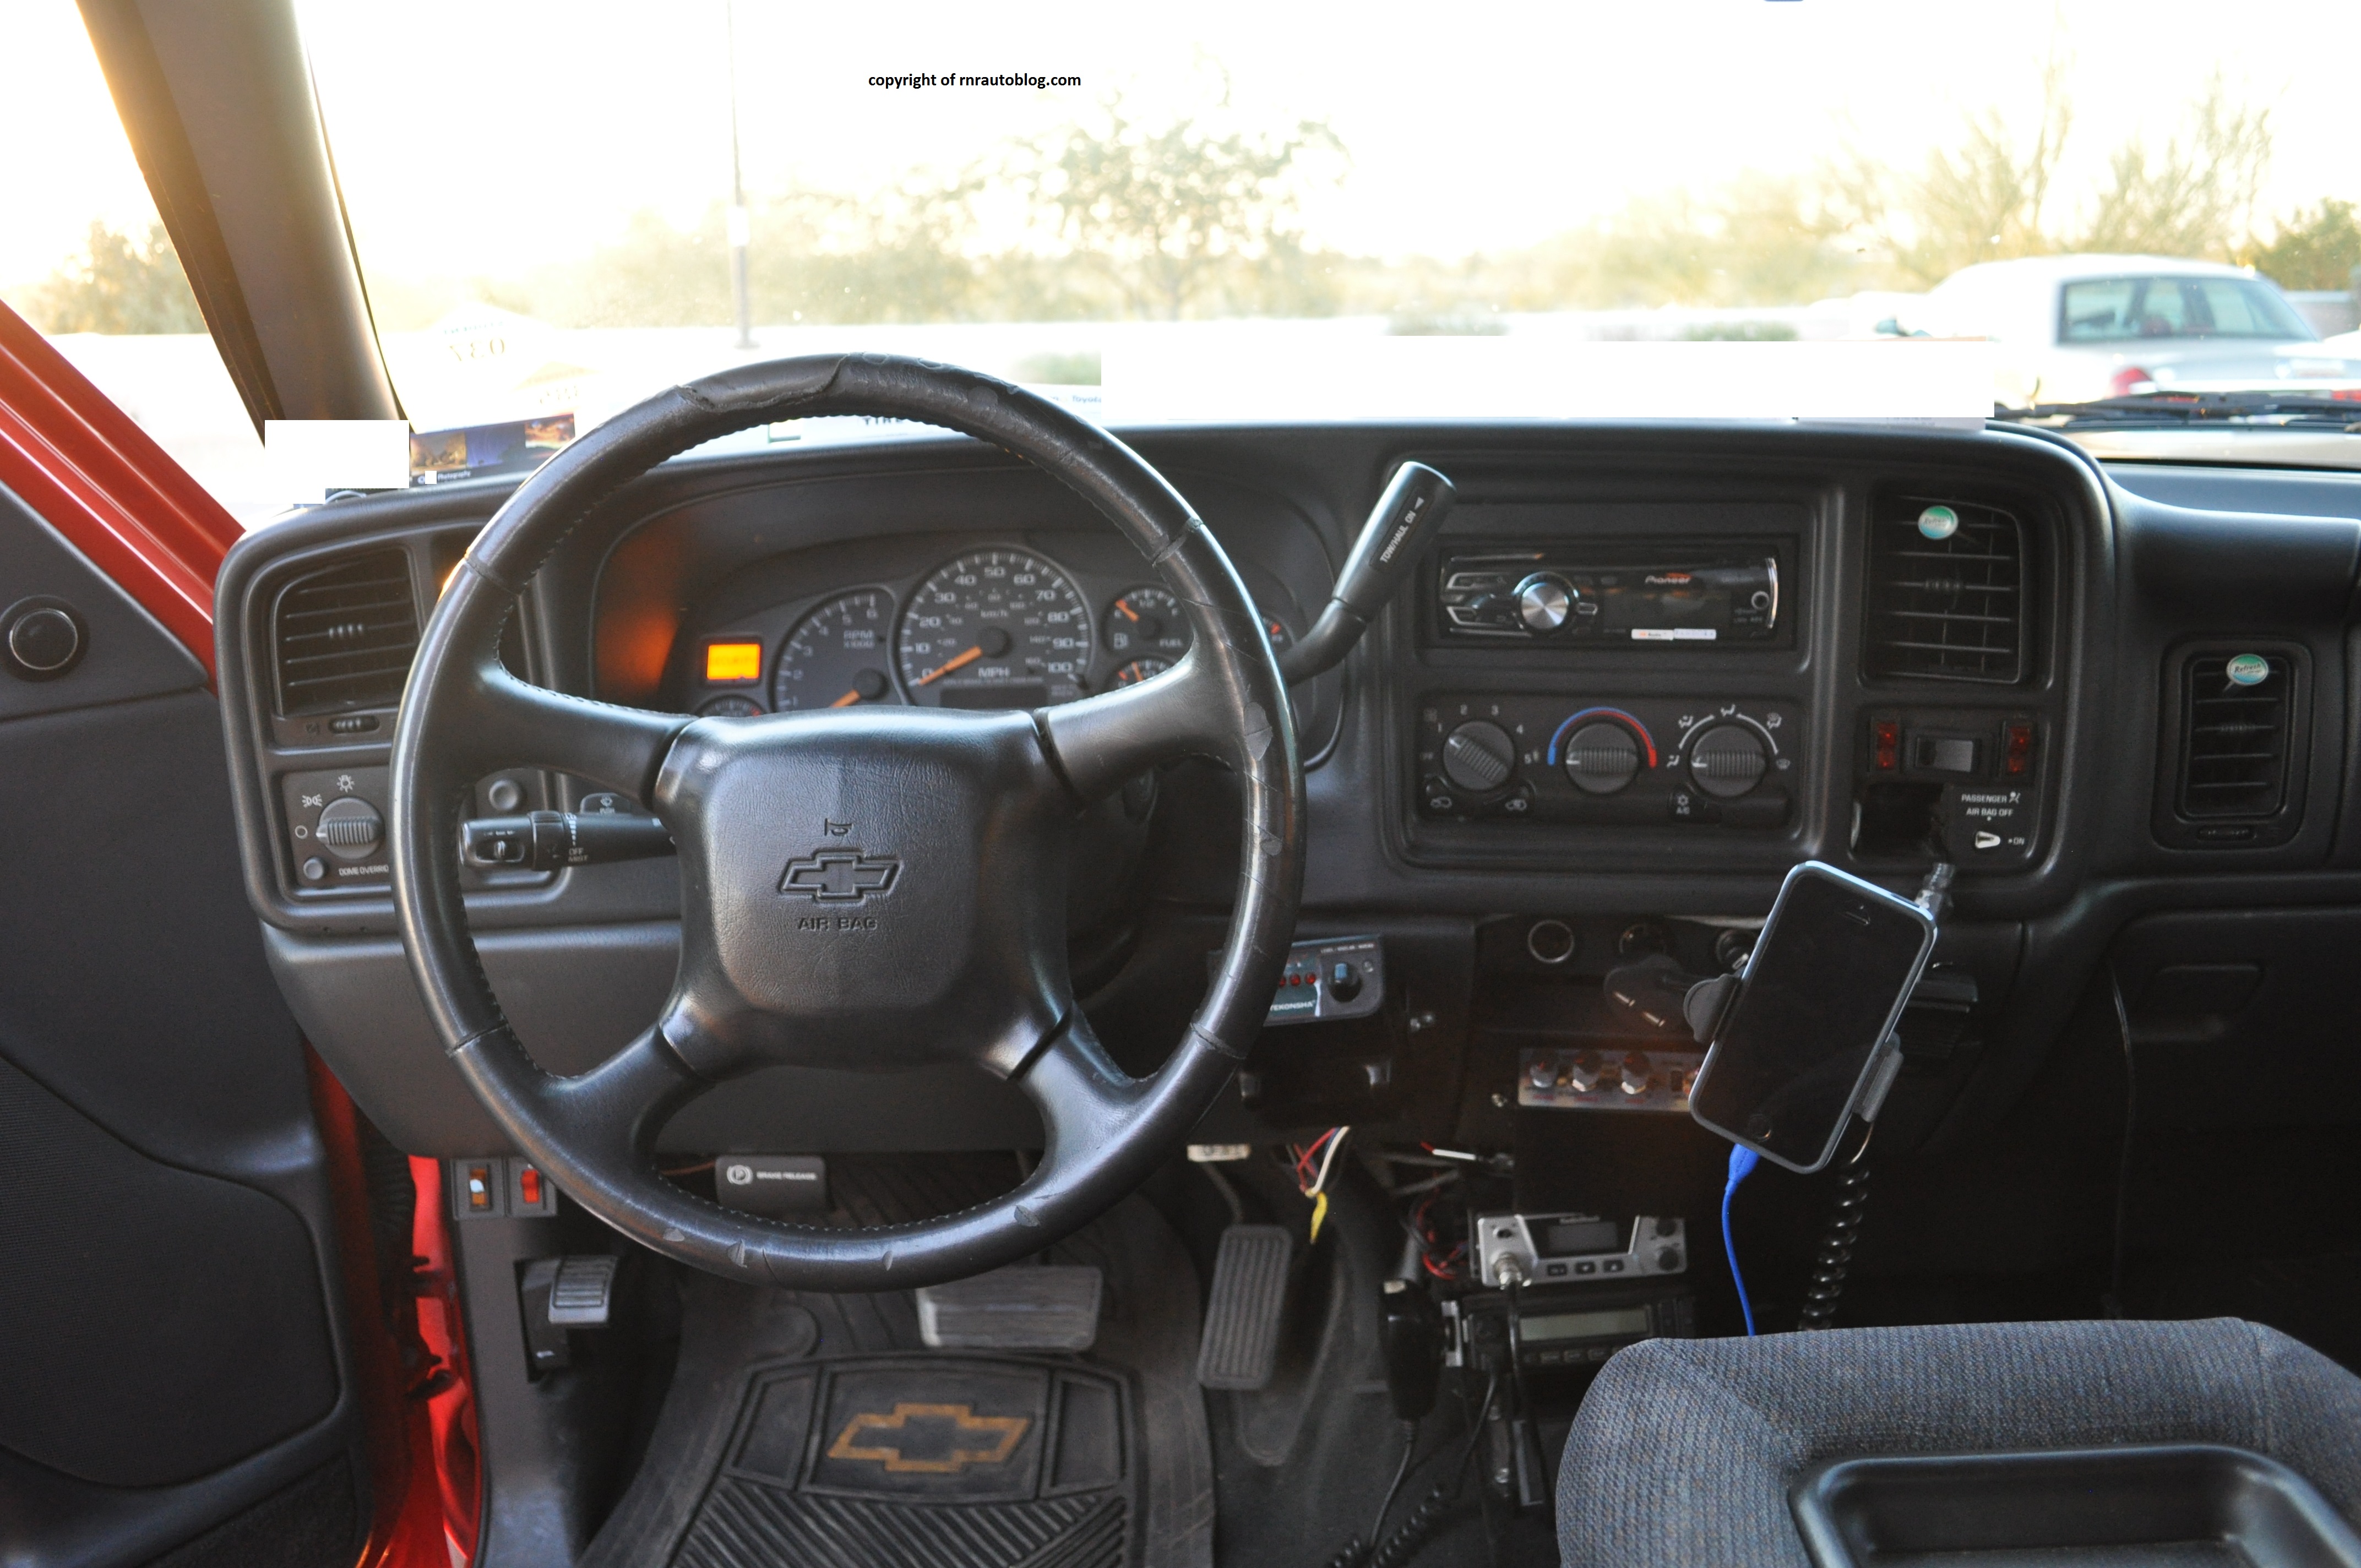 2002 chevy silverado 2500hd manual transmission